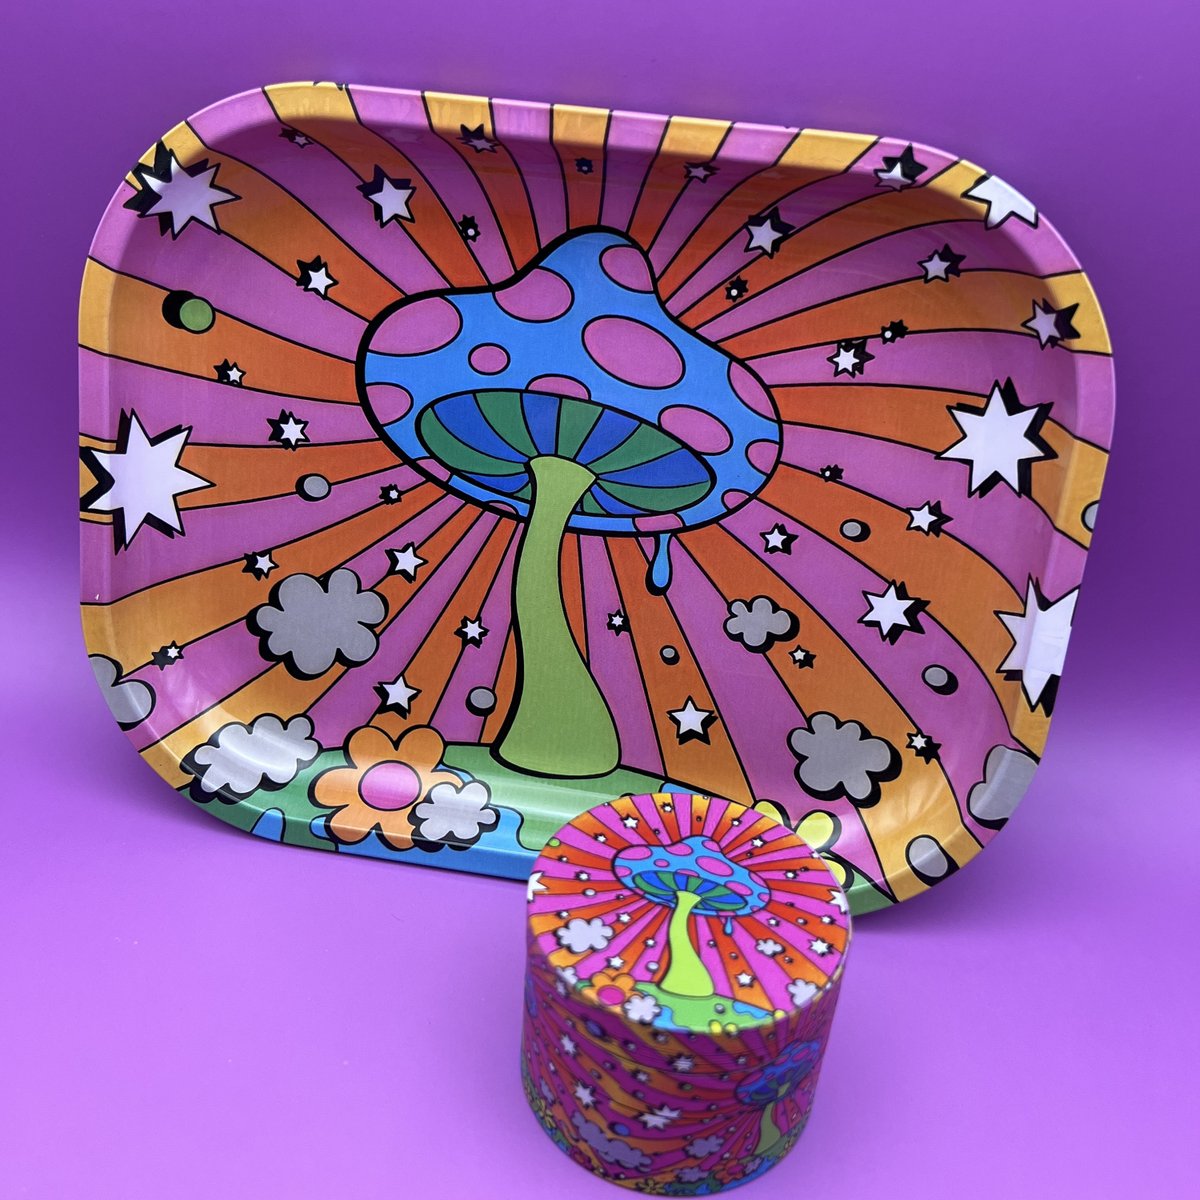 Rolling Tray and Grinder Kit | Mushroom Psychedelic Set Gift Box etsy.me/43Tz2P7 #cutetraygrinder #resinrollingtray #beautifulmetaltray #giftsetforher #traygrinderset #mushroom #shroom #psychedelic #tray #grinder #set